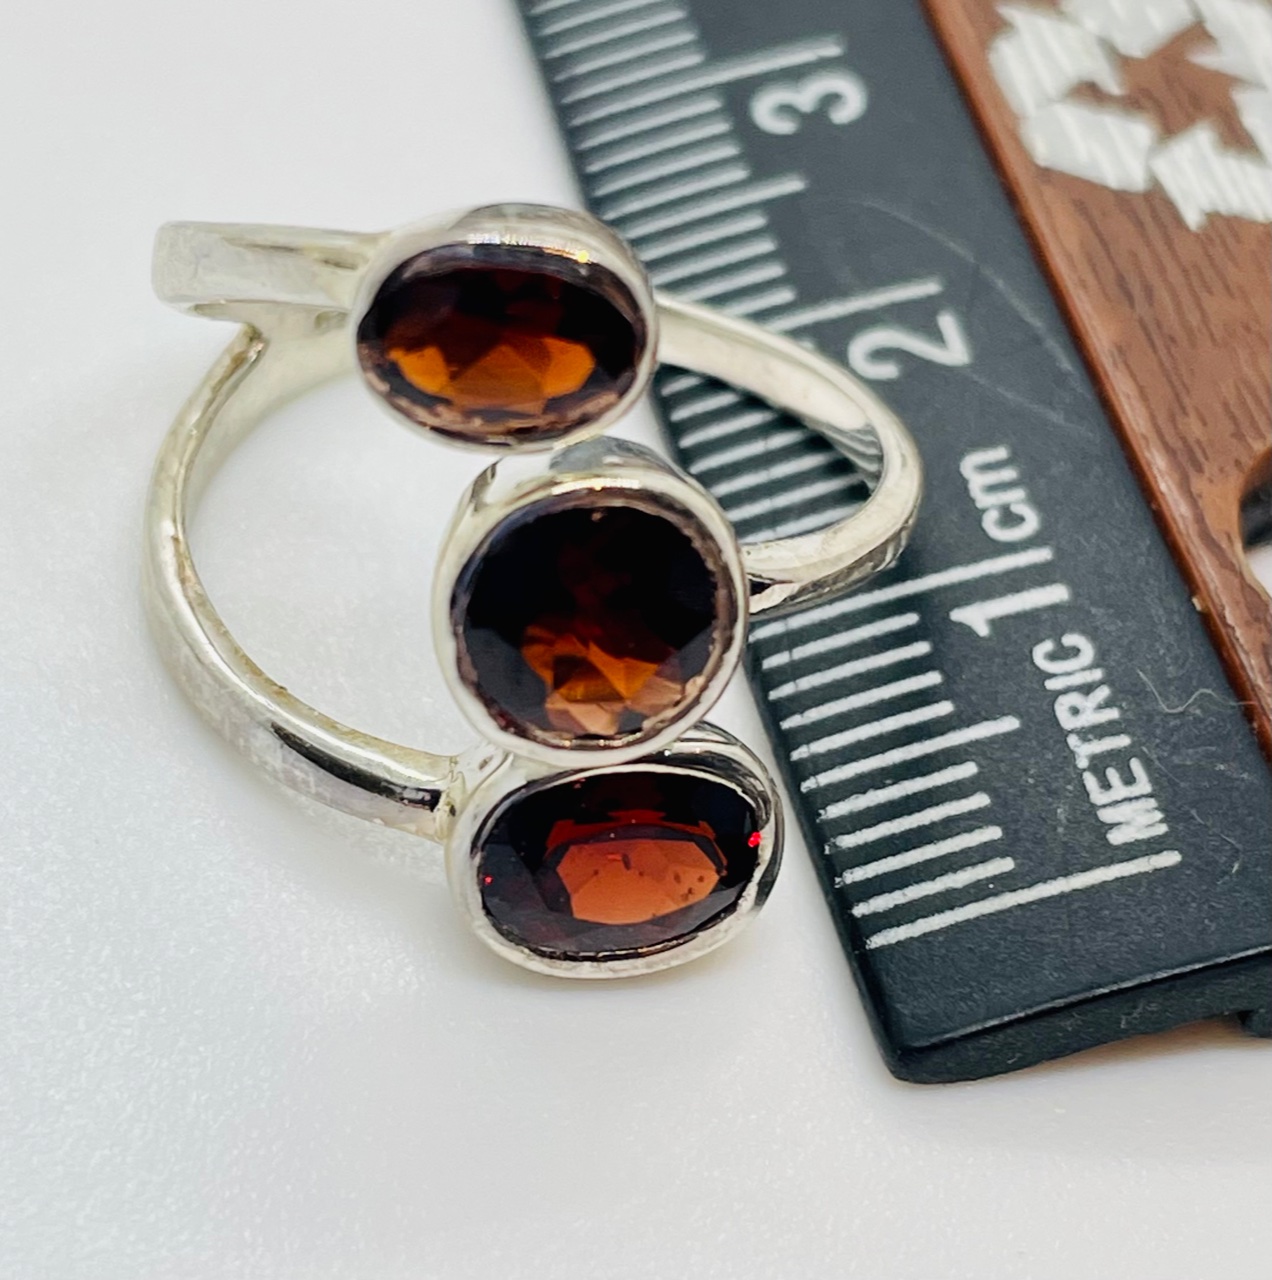 Garnet Ring 6.68 grams Size 7-9 (adjustable) - Click Image to Close